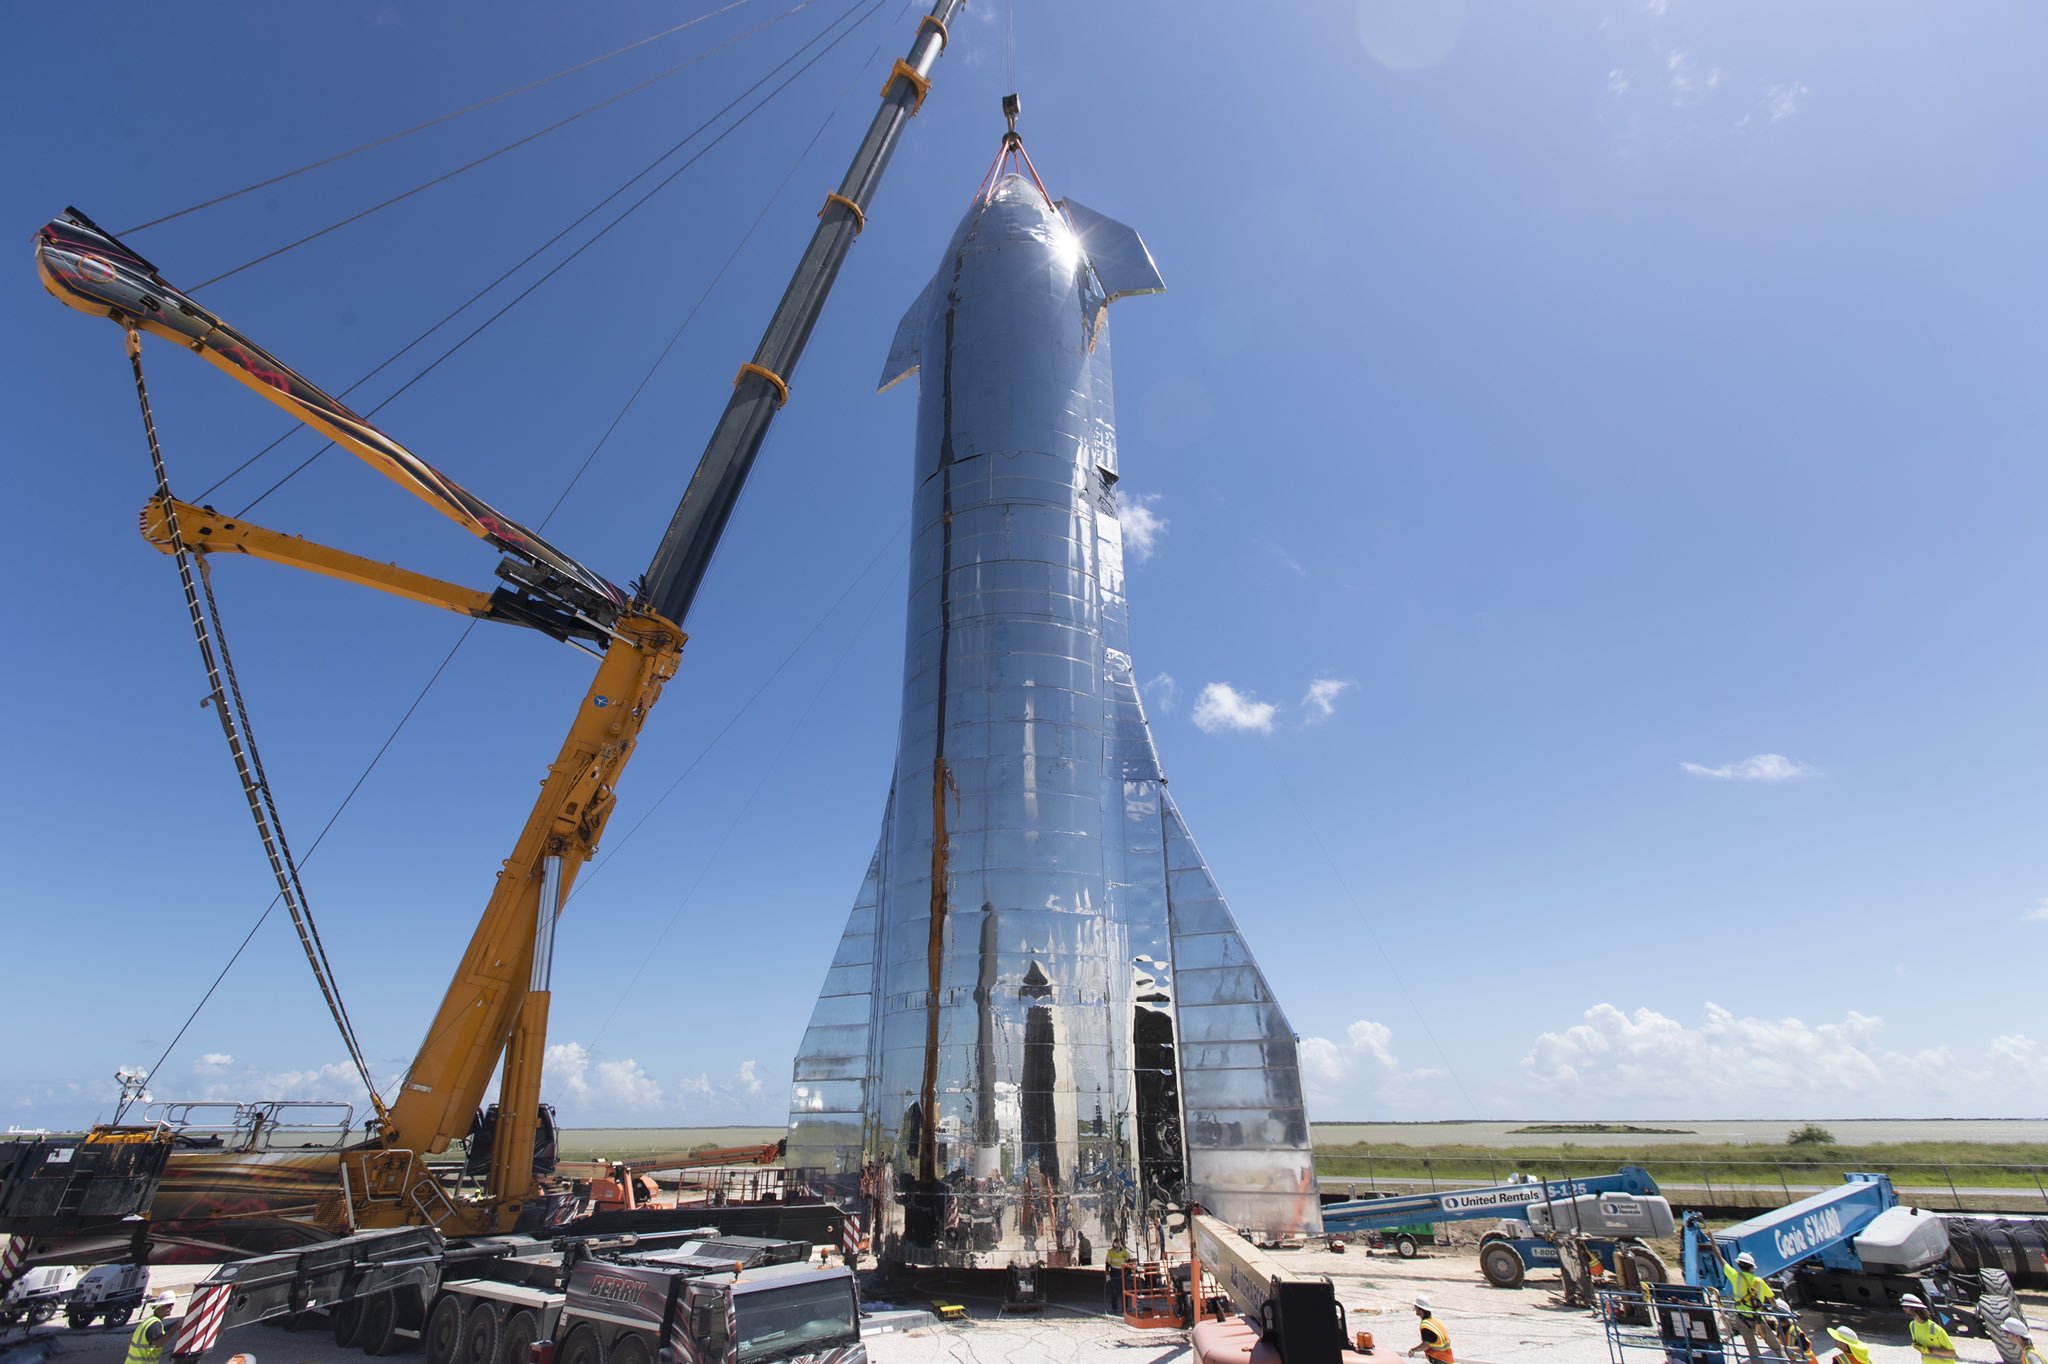 SpaceX：埃隆·马斯克的新火箭将如何改变太空竞赛 - FT中文网